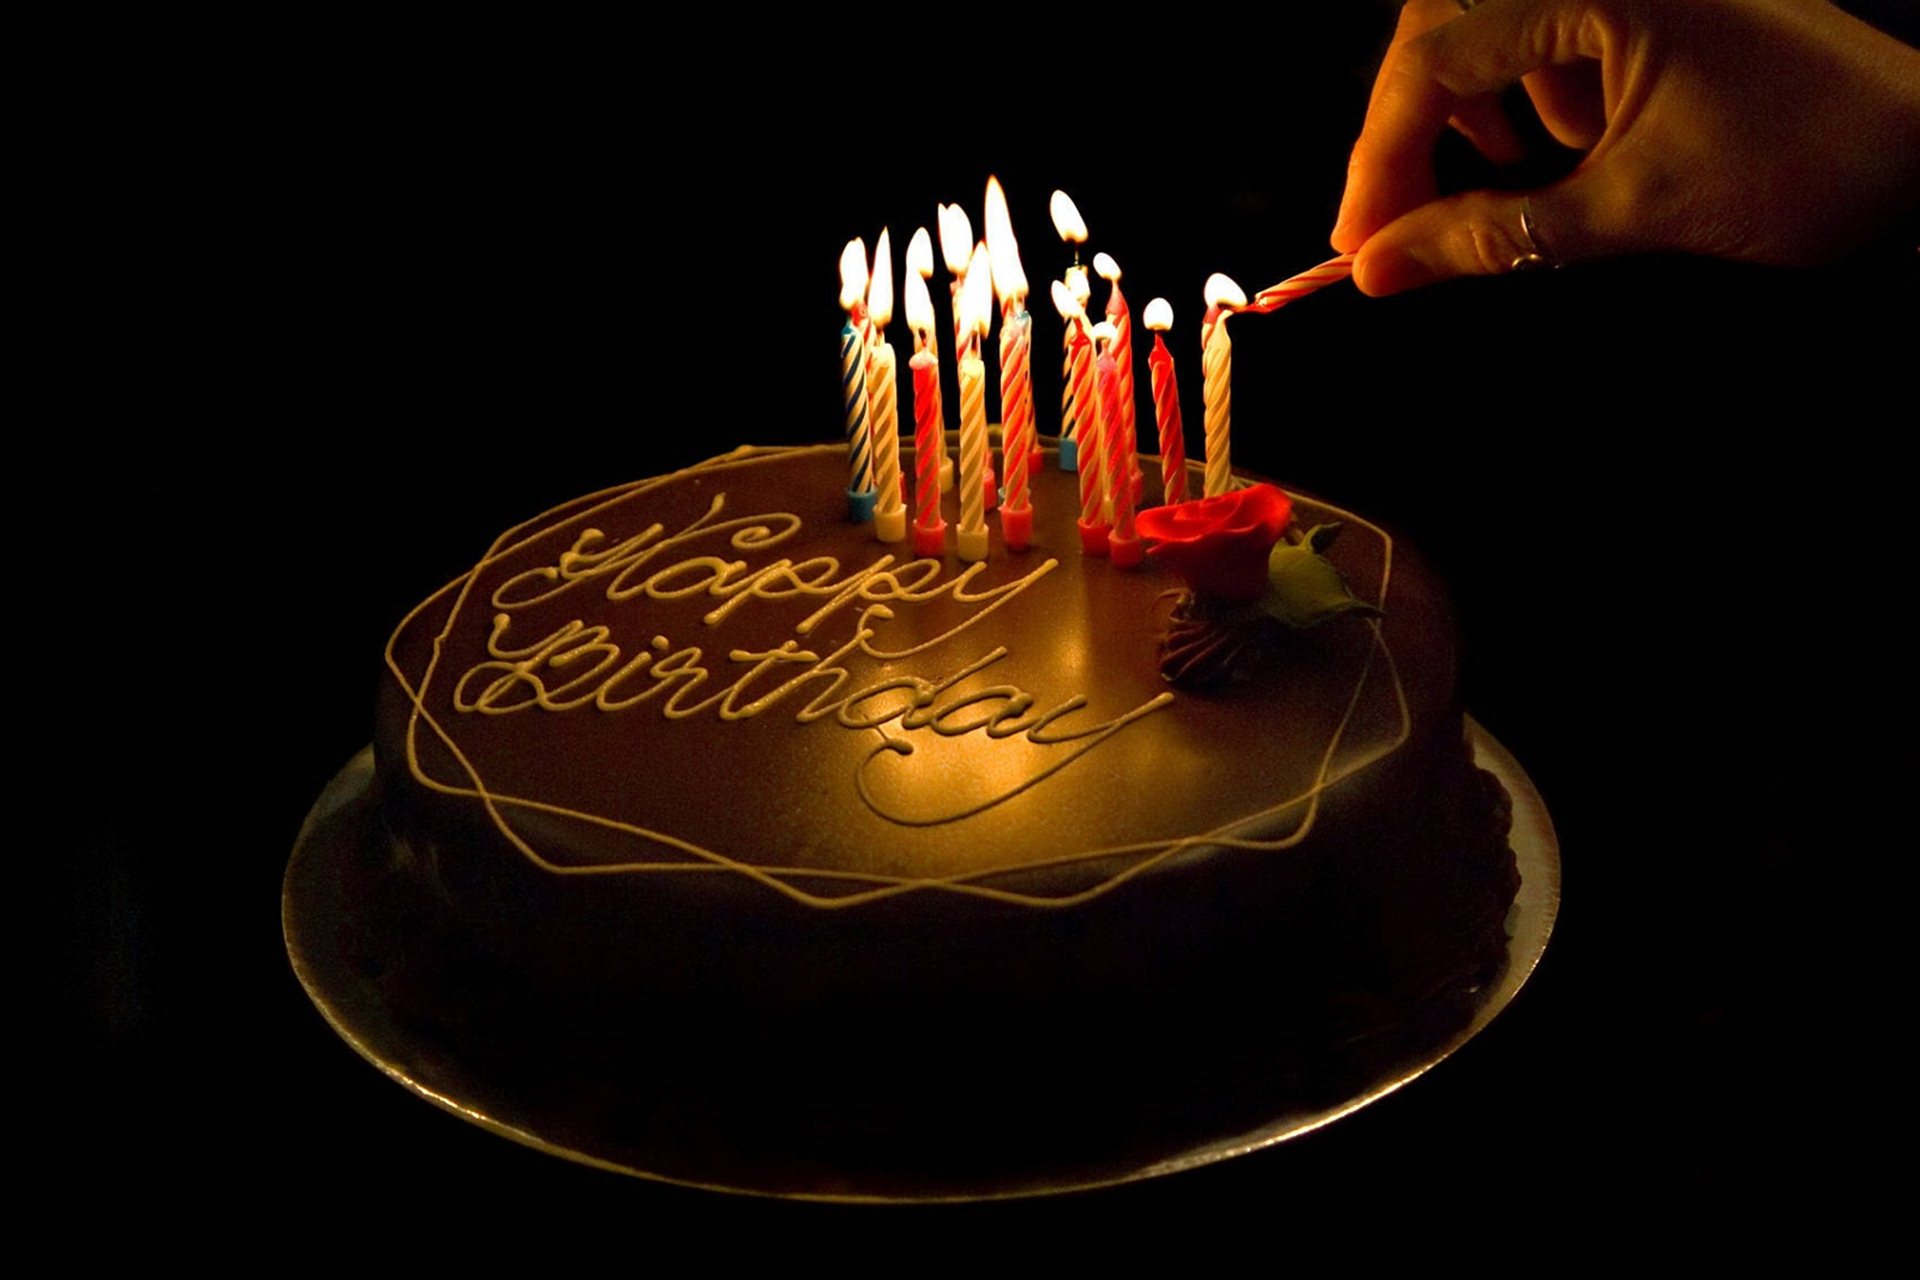 Happy-Birthday-Cake-To-You-HD-Wallpaper.jpg